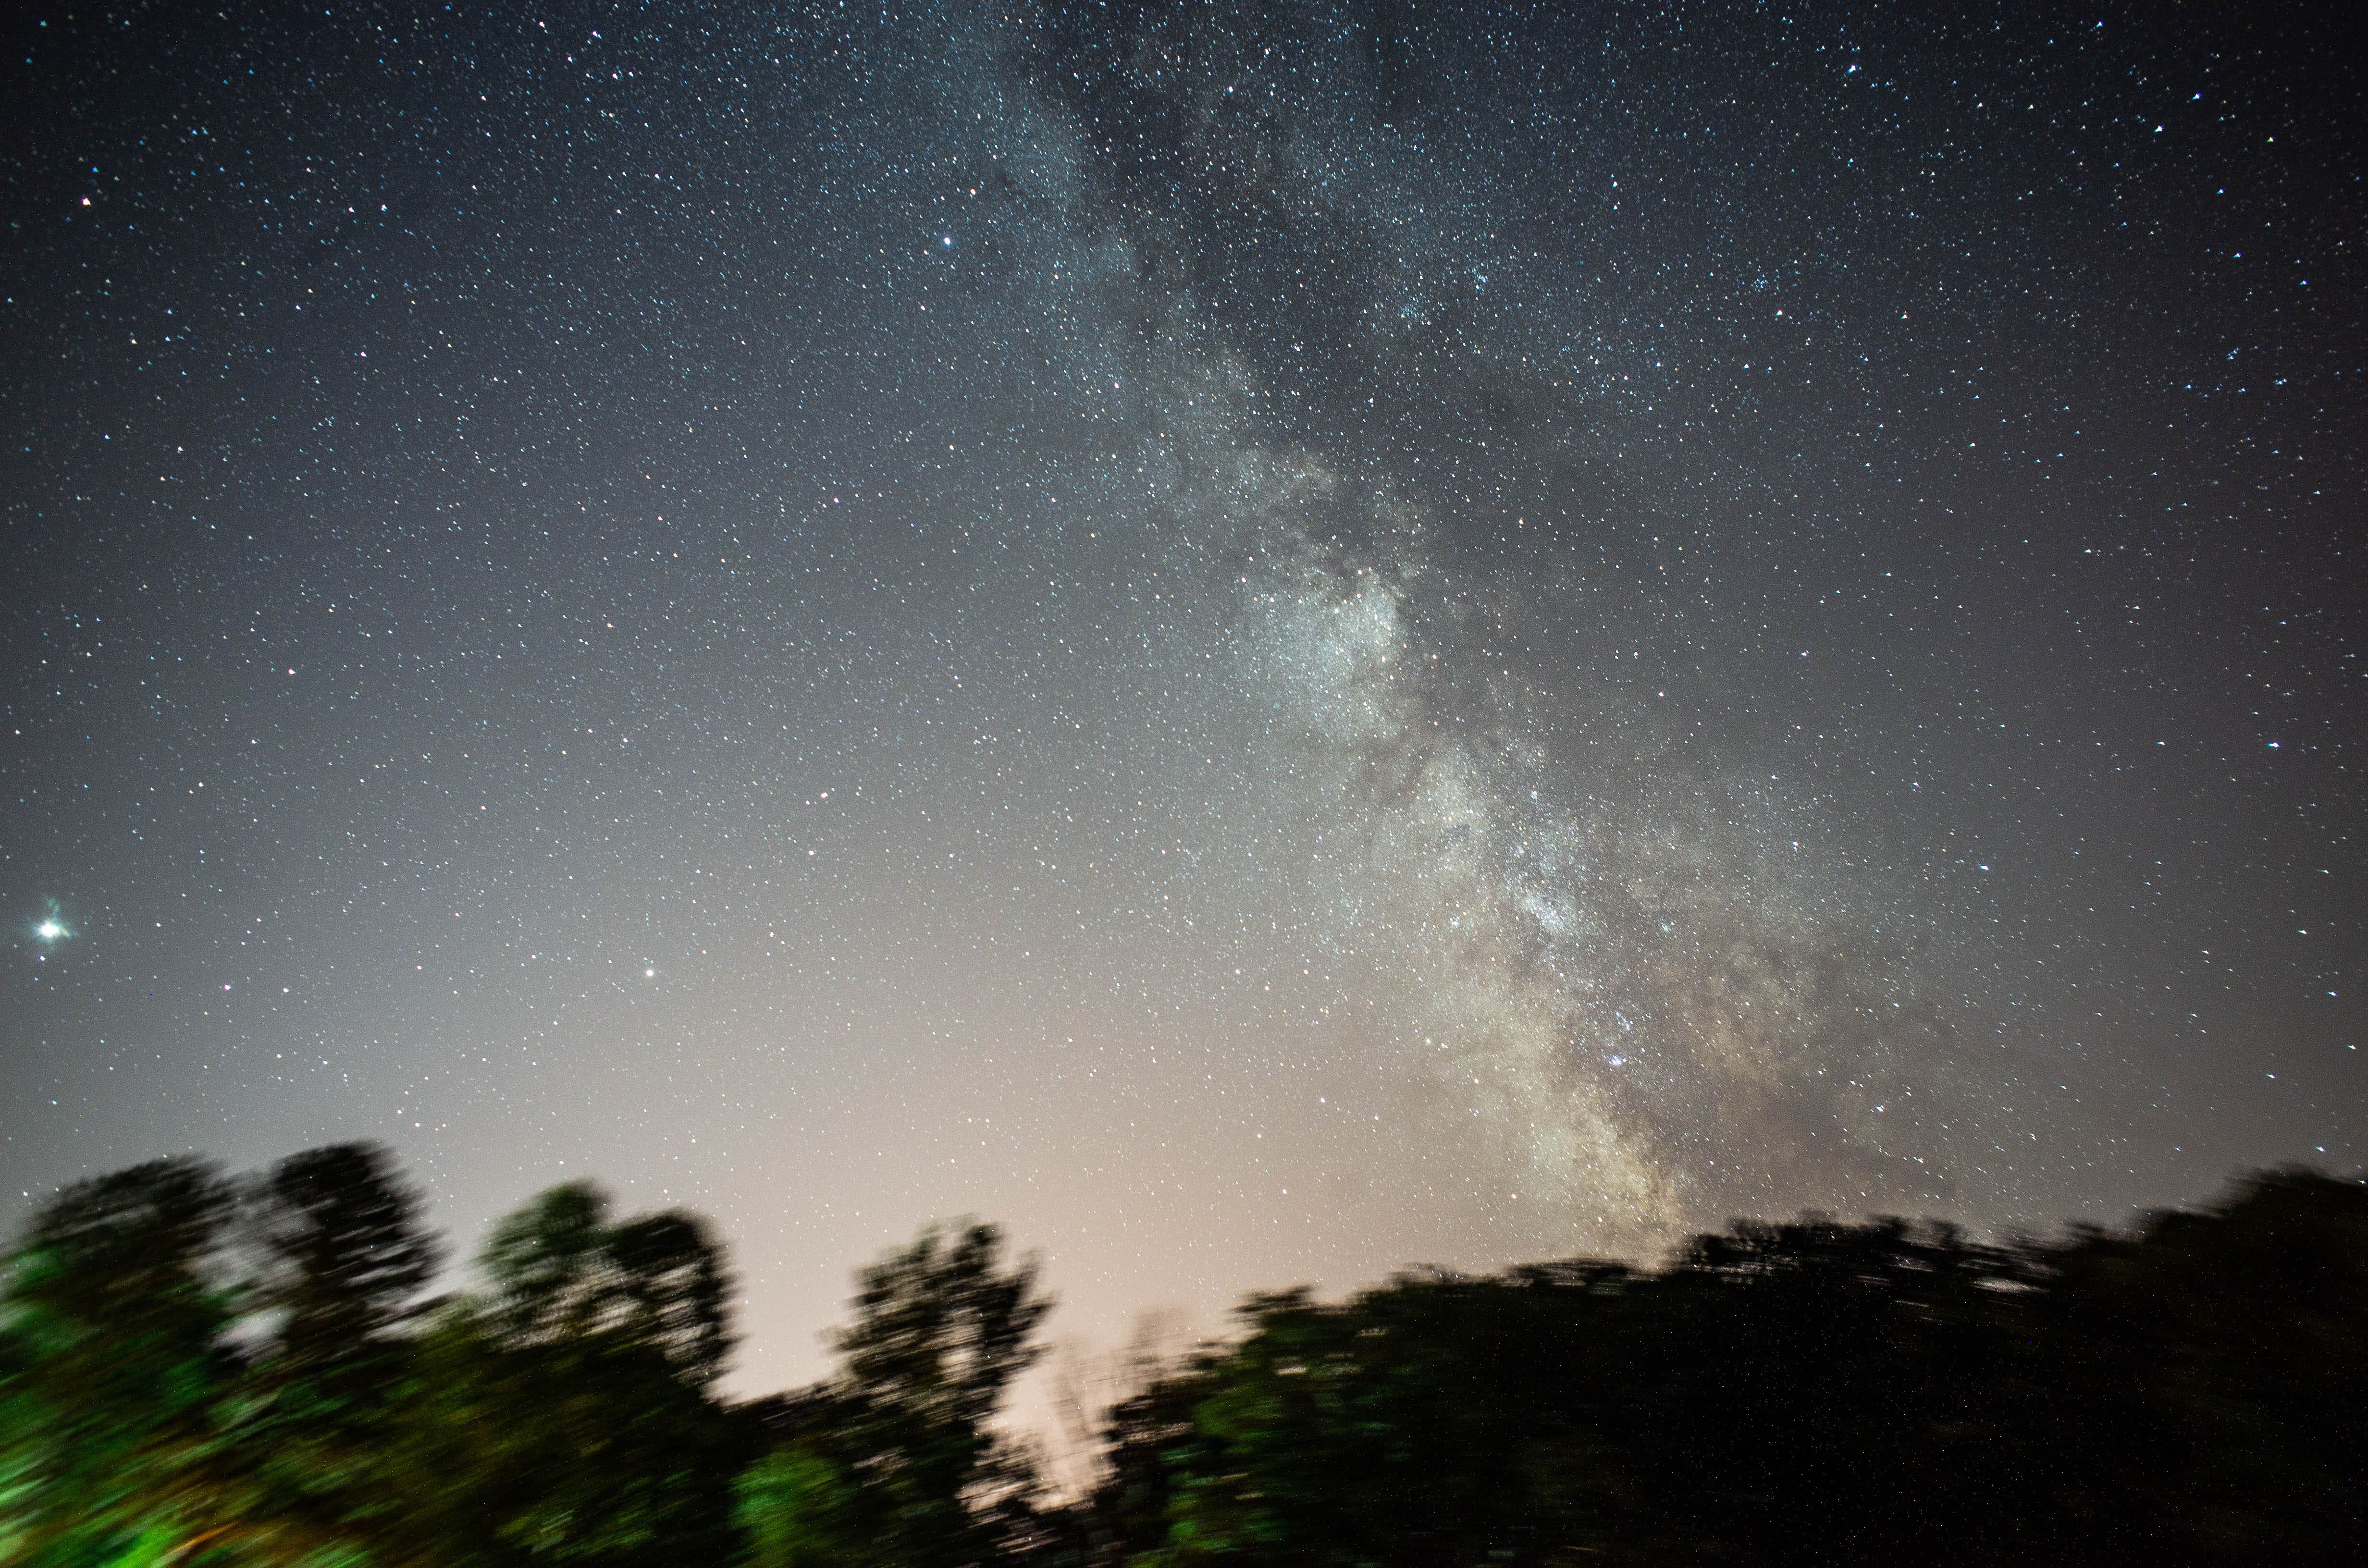 Milky Way shot taken on Ricoh GR with Omegon Minitrack LX2